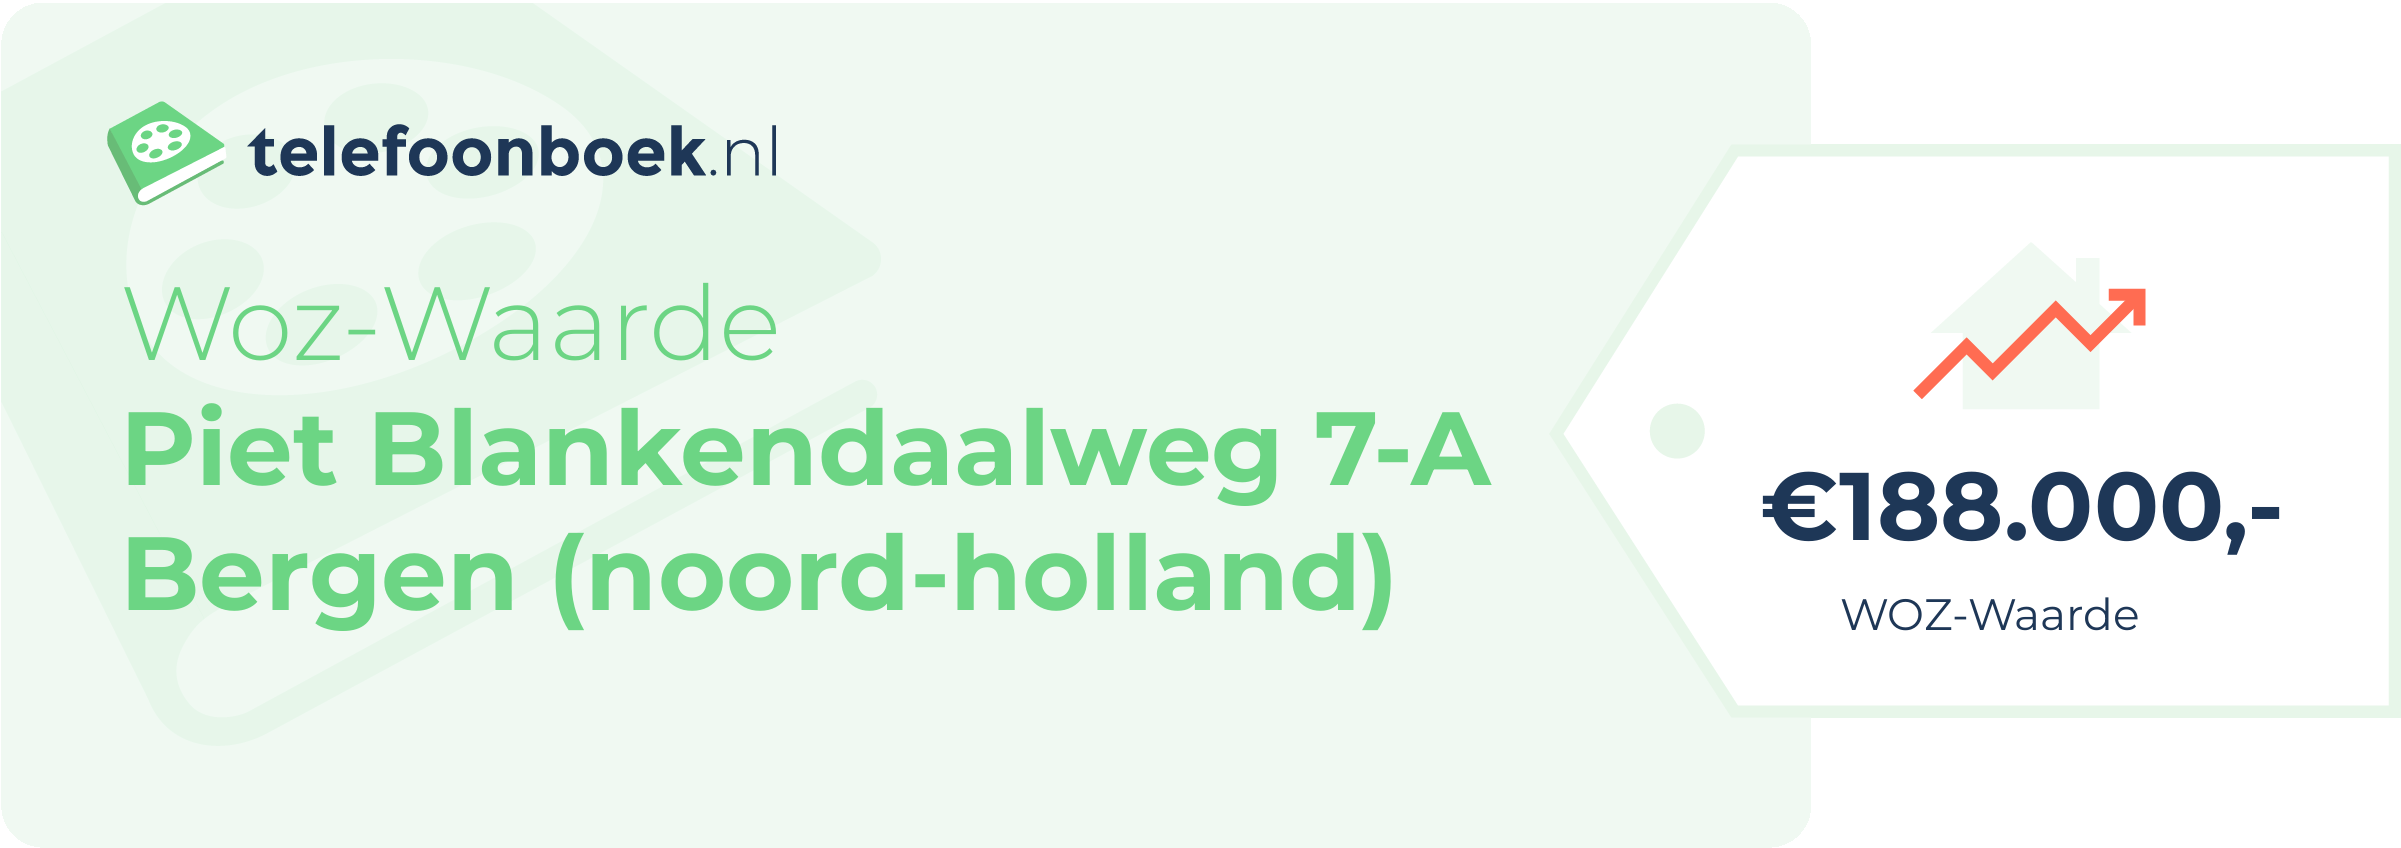 WOZ-waarde Piet Blankendaalweg 7-A Bergen (Noord-Holland)